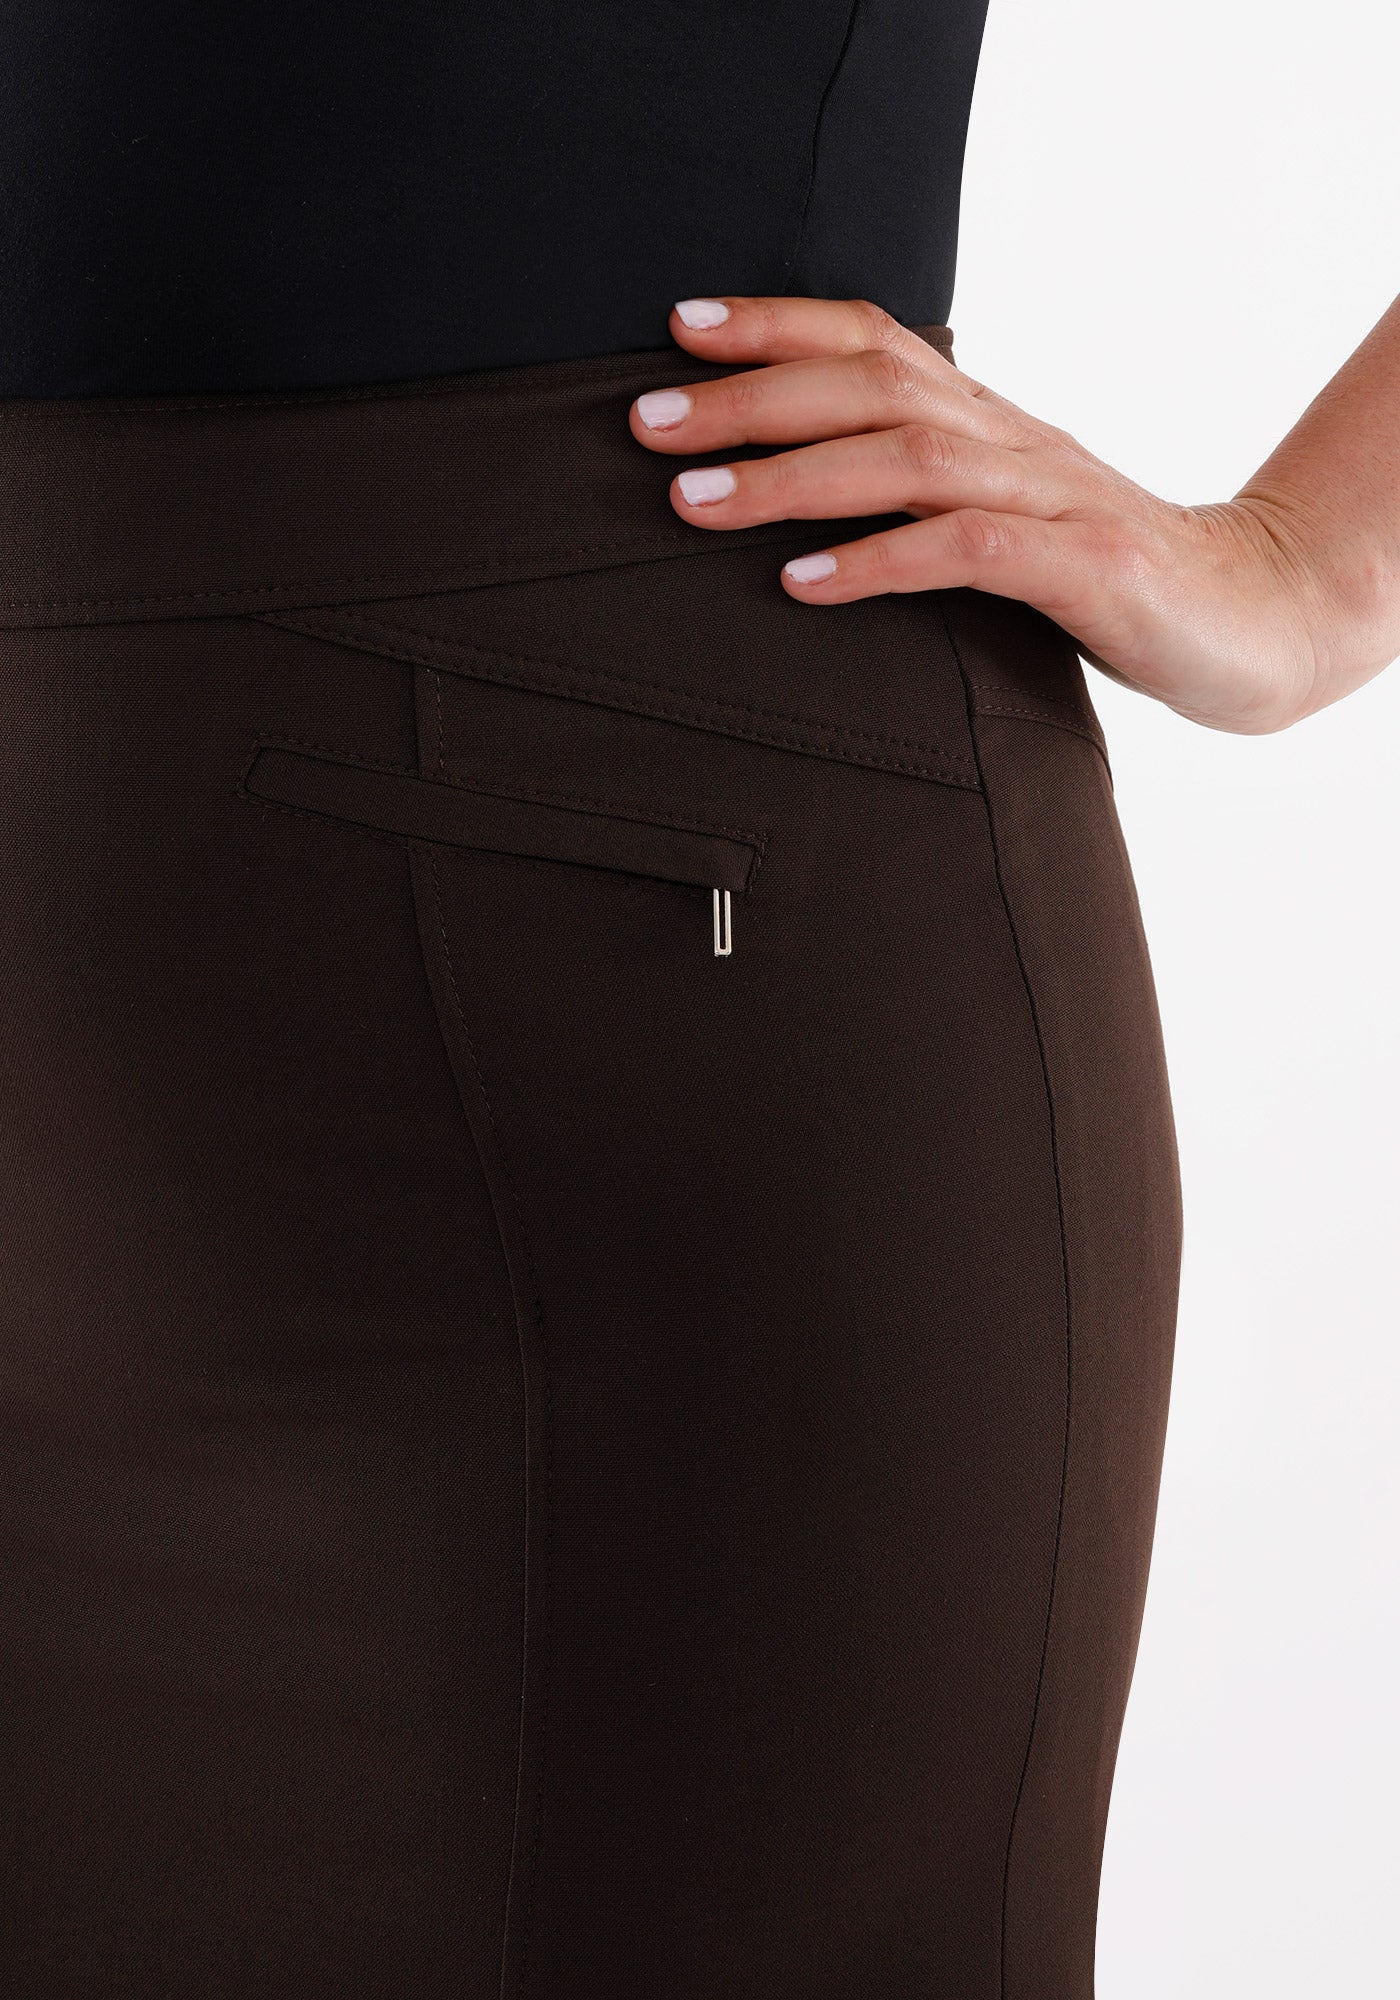 Women's Plus Size Oversized Brown Maxi Fishtail Skirt G-Line